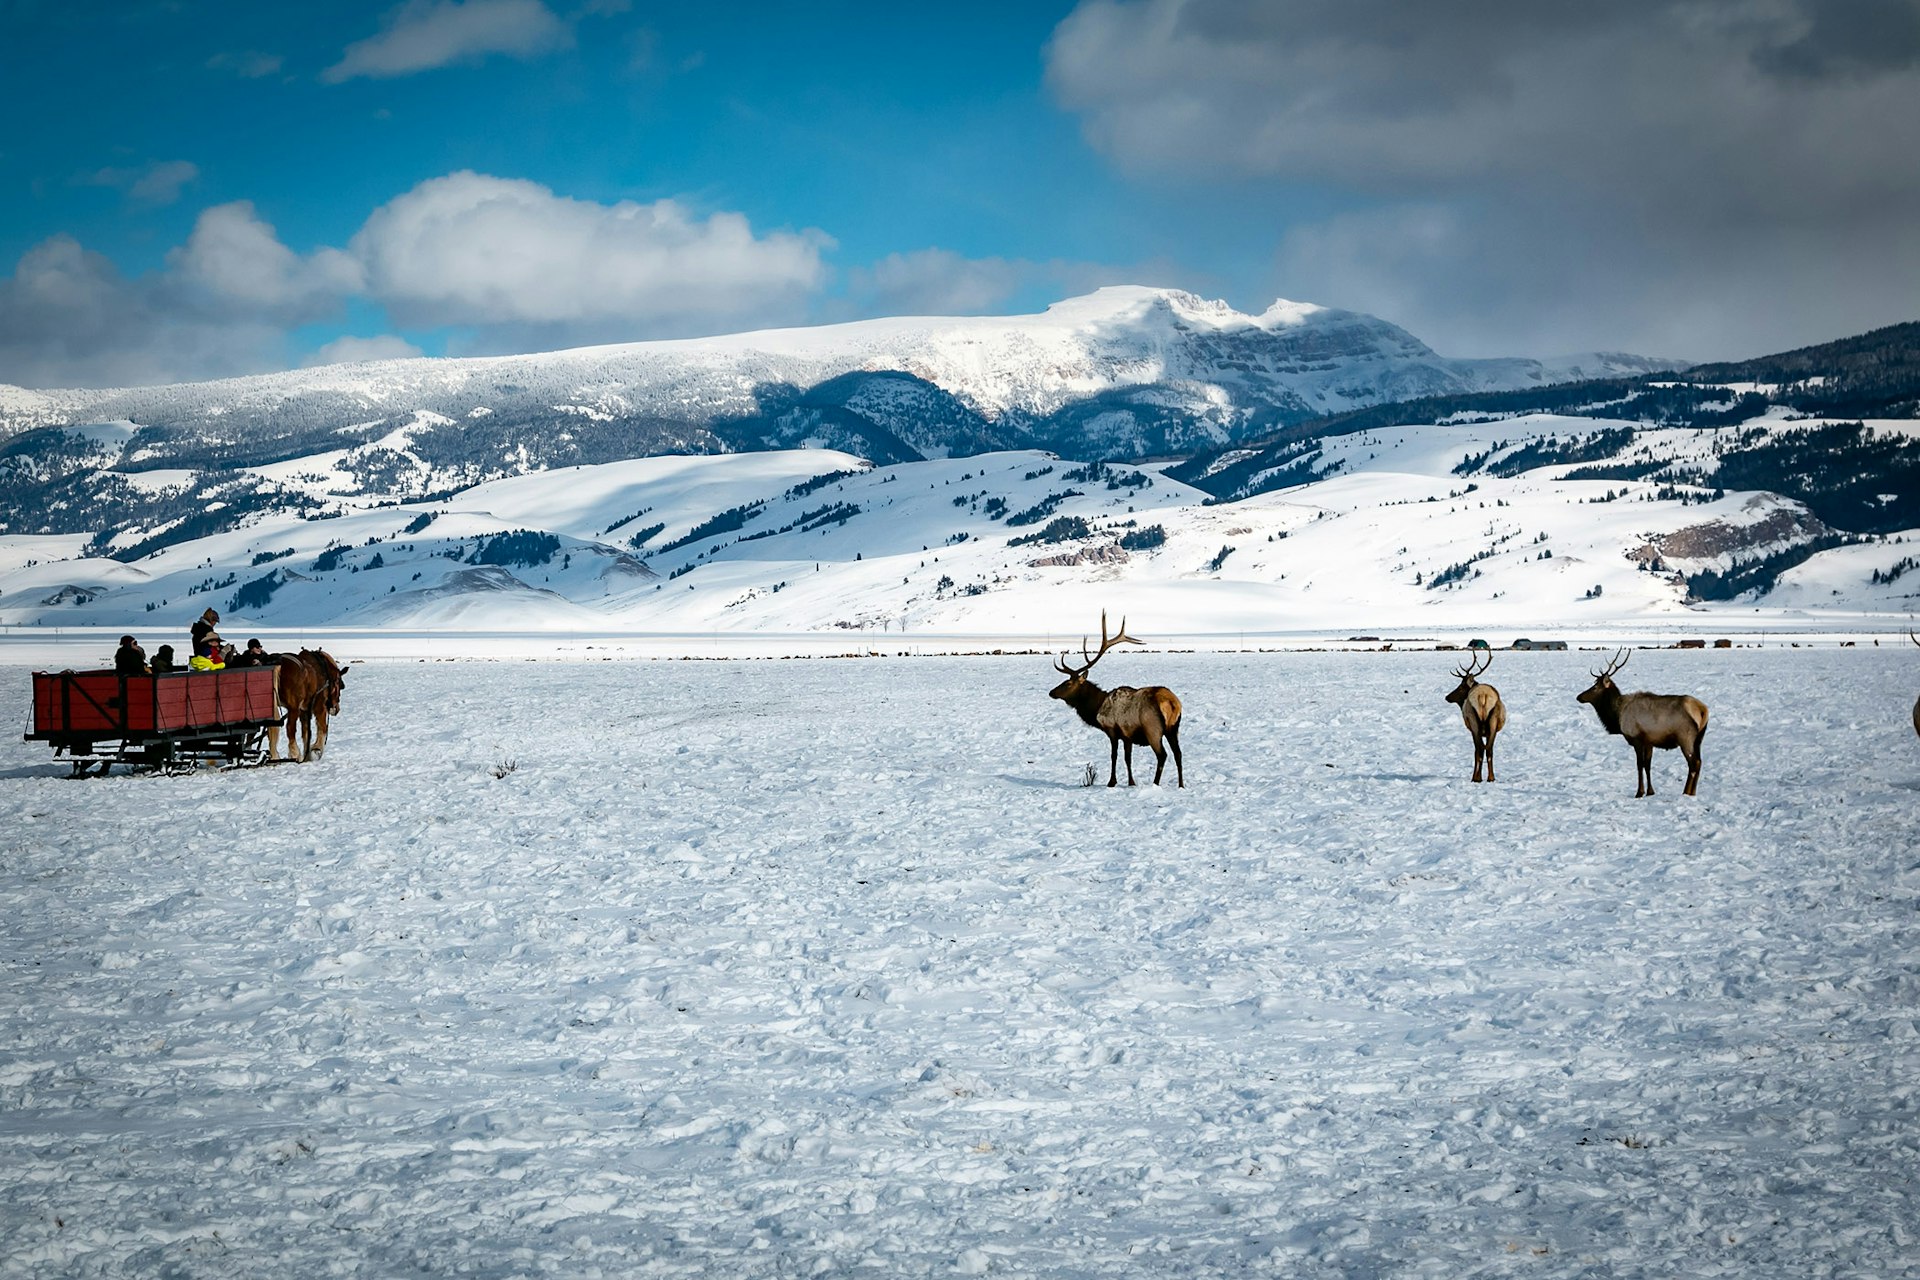 Sleigh ride on Elk Refuge in winter